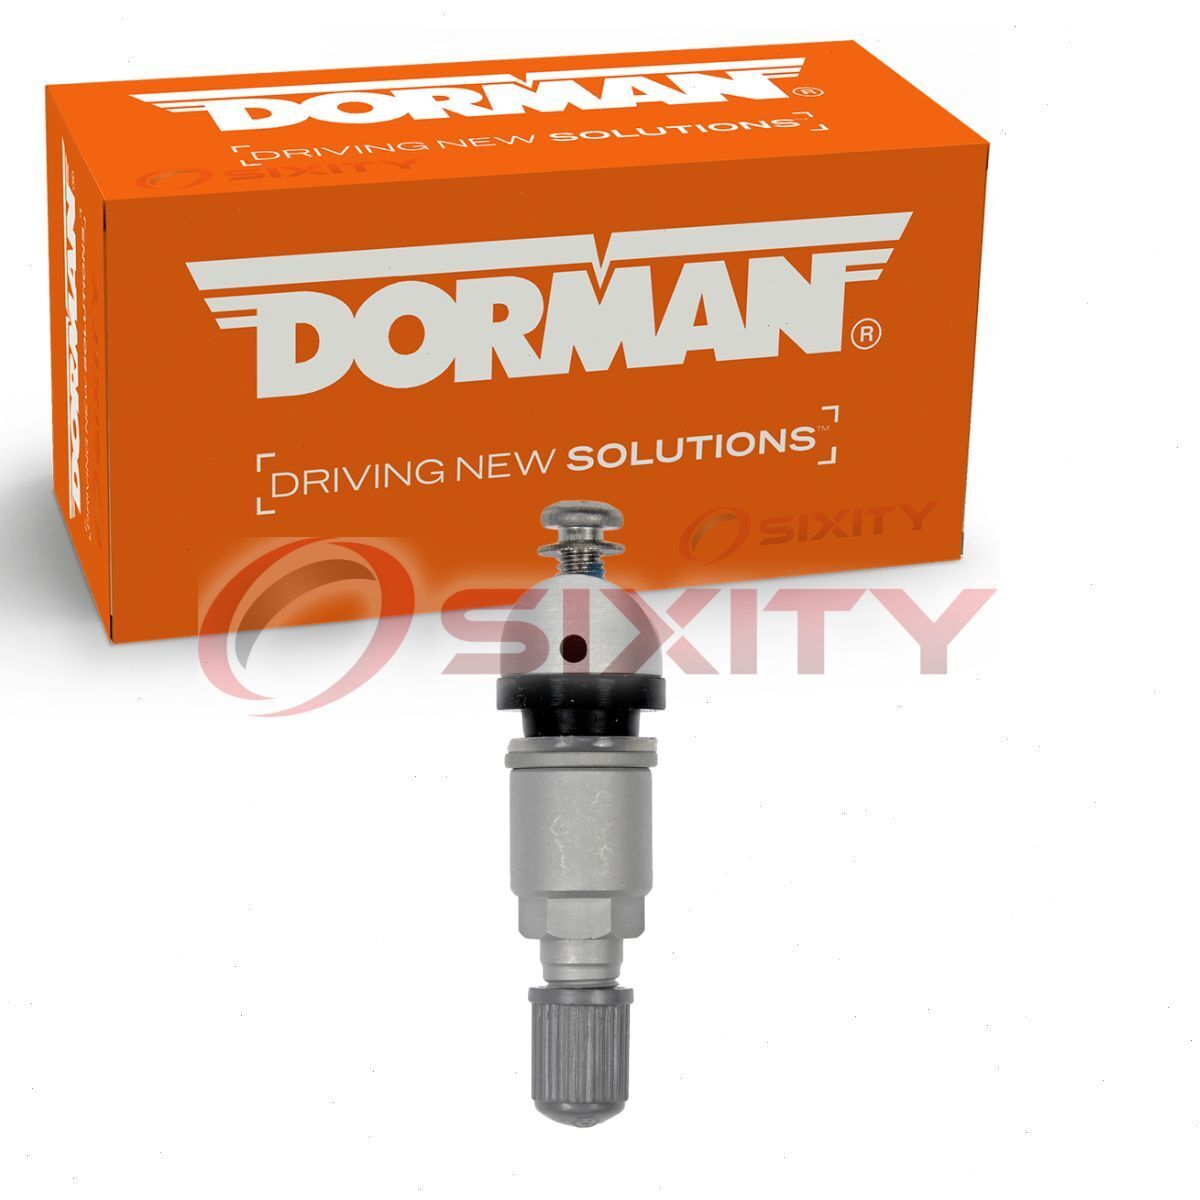 Dorman TPMS Valve Kit for 1999 BMW 318ti Tire Pressure Monitoring System  ue